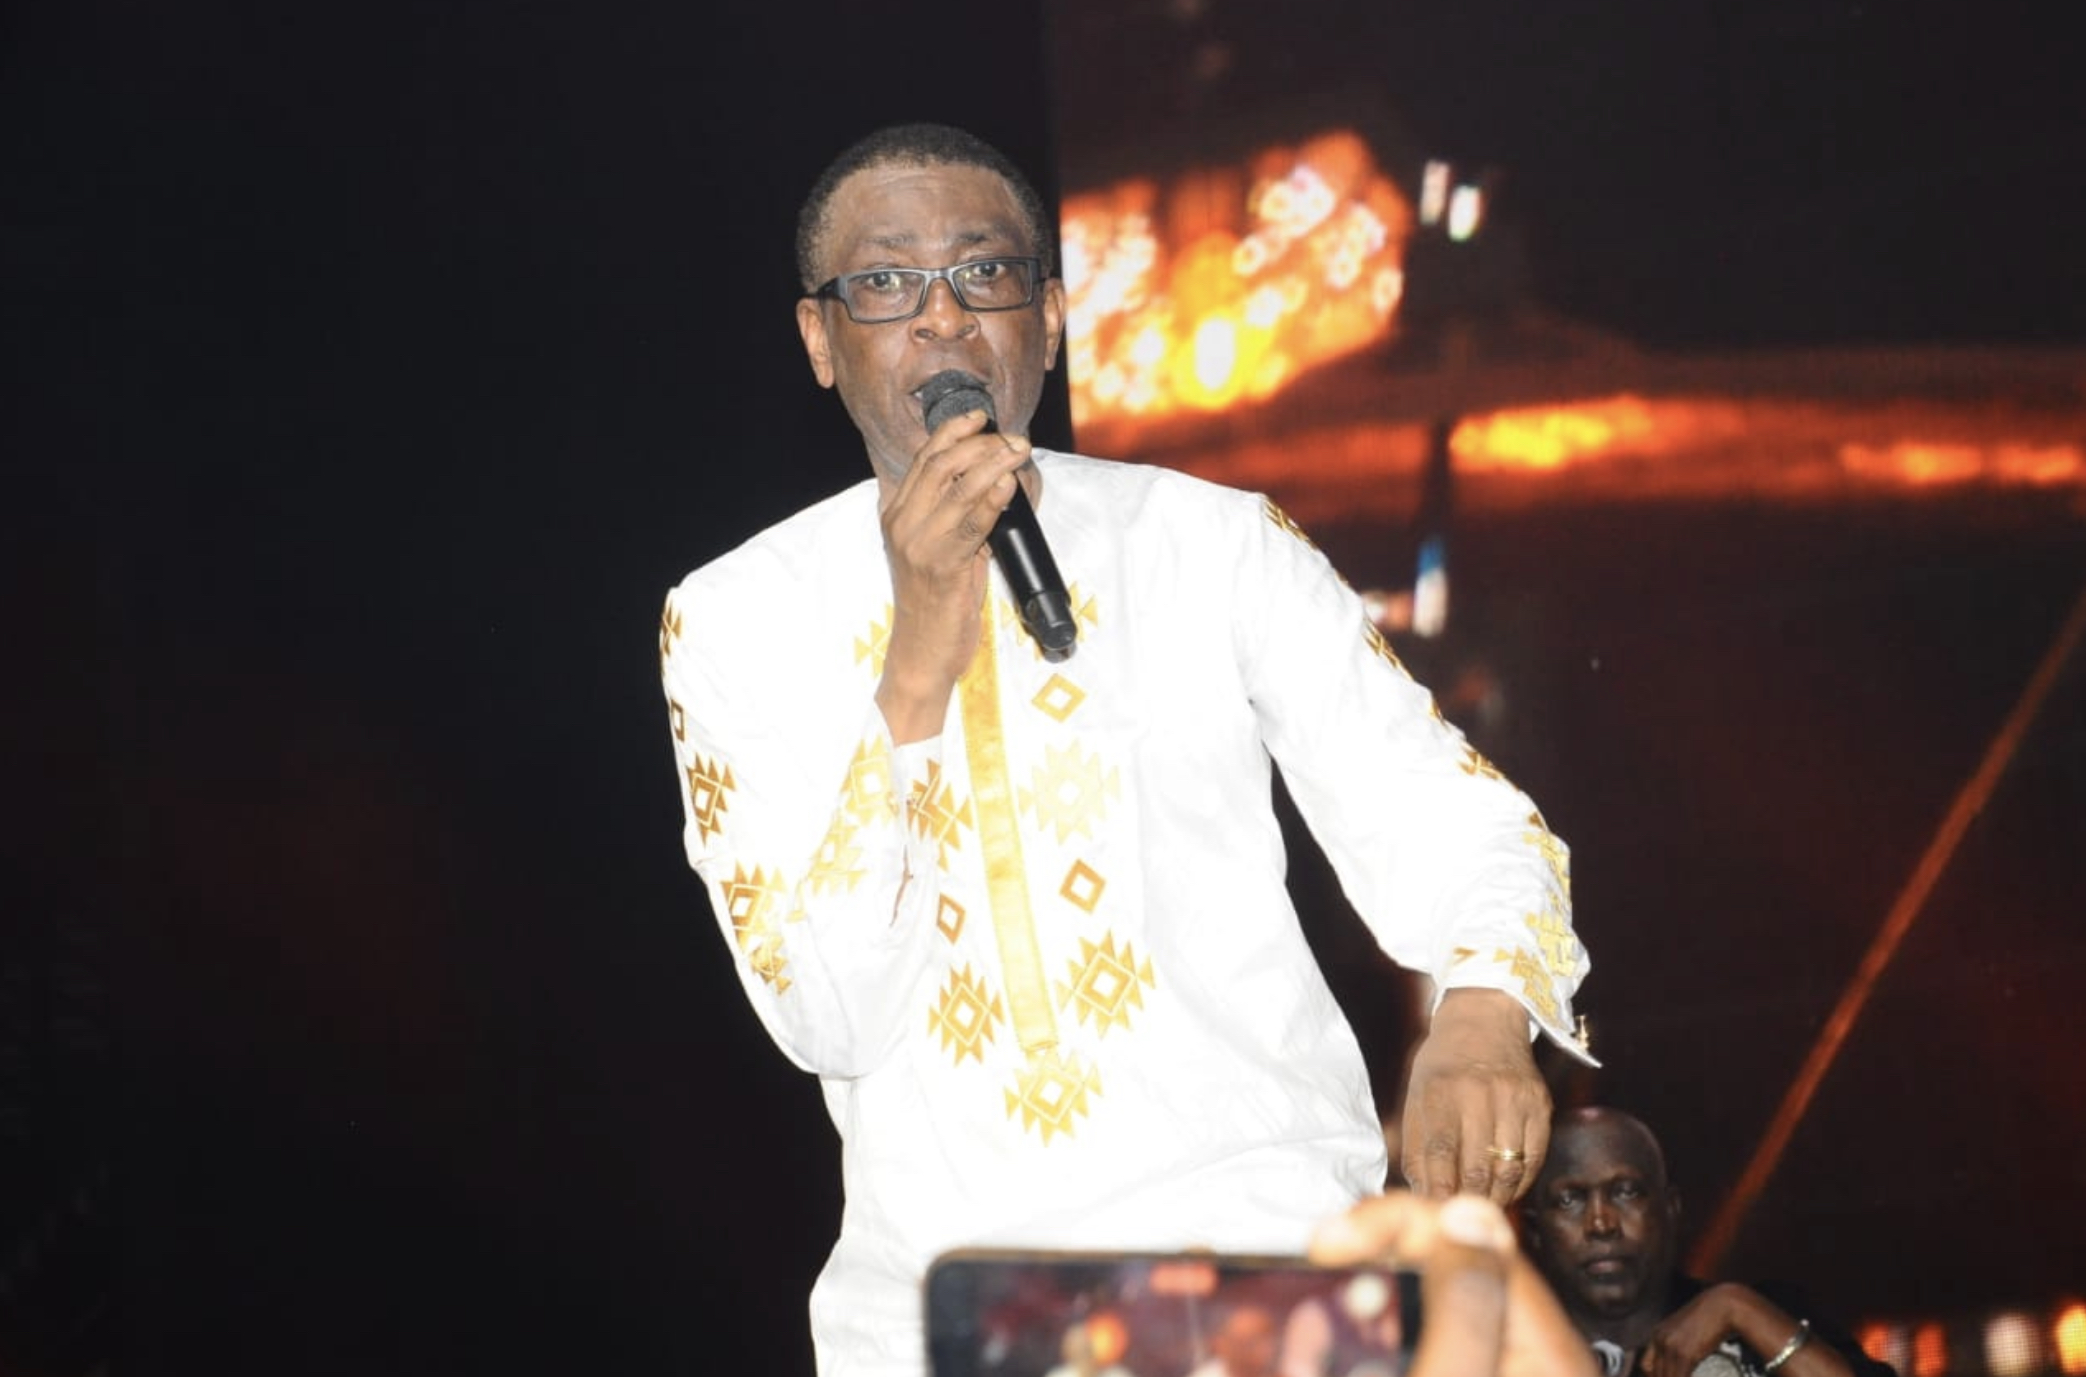 Ce que Youssou Ndour pense des insulteurs : "saaga wo keneu, sa doundine mola nekhoul"